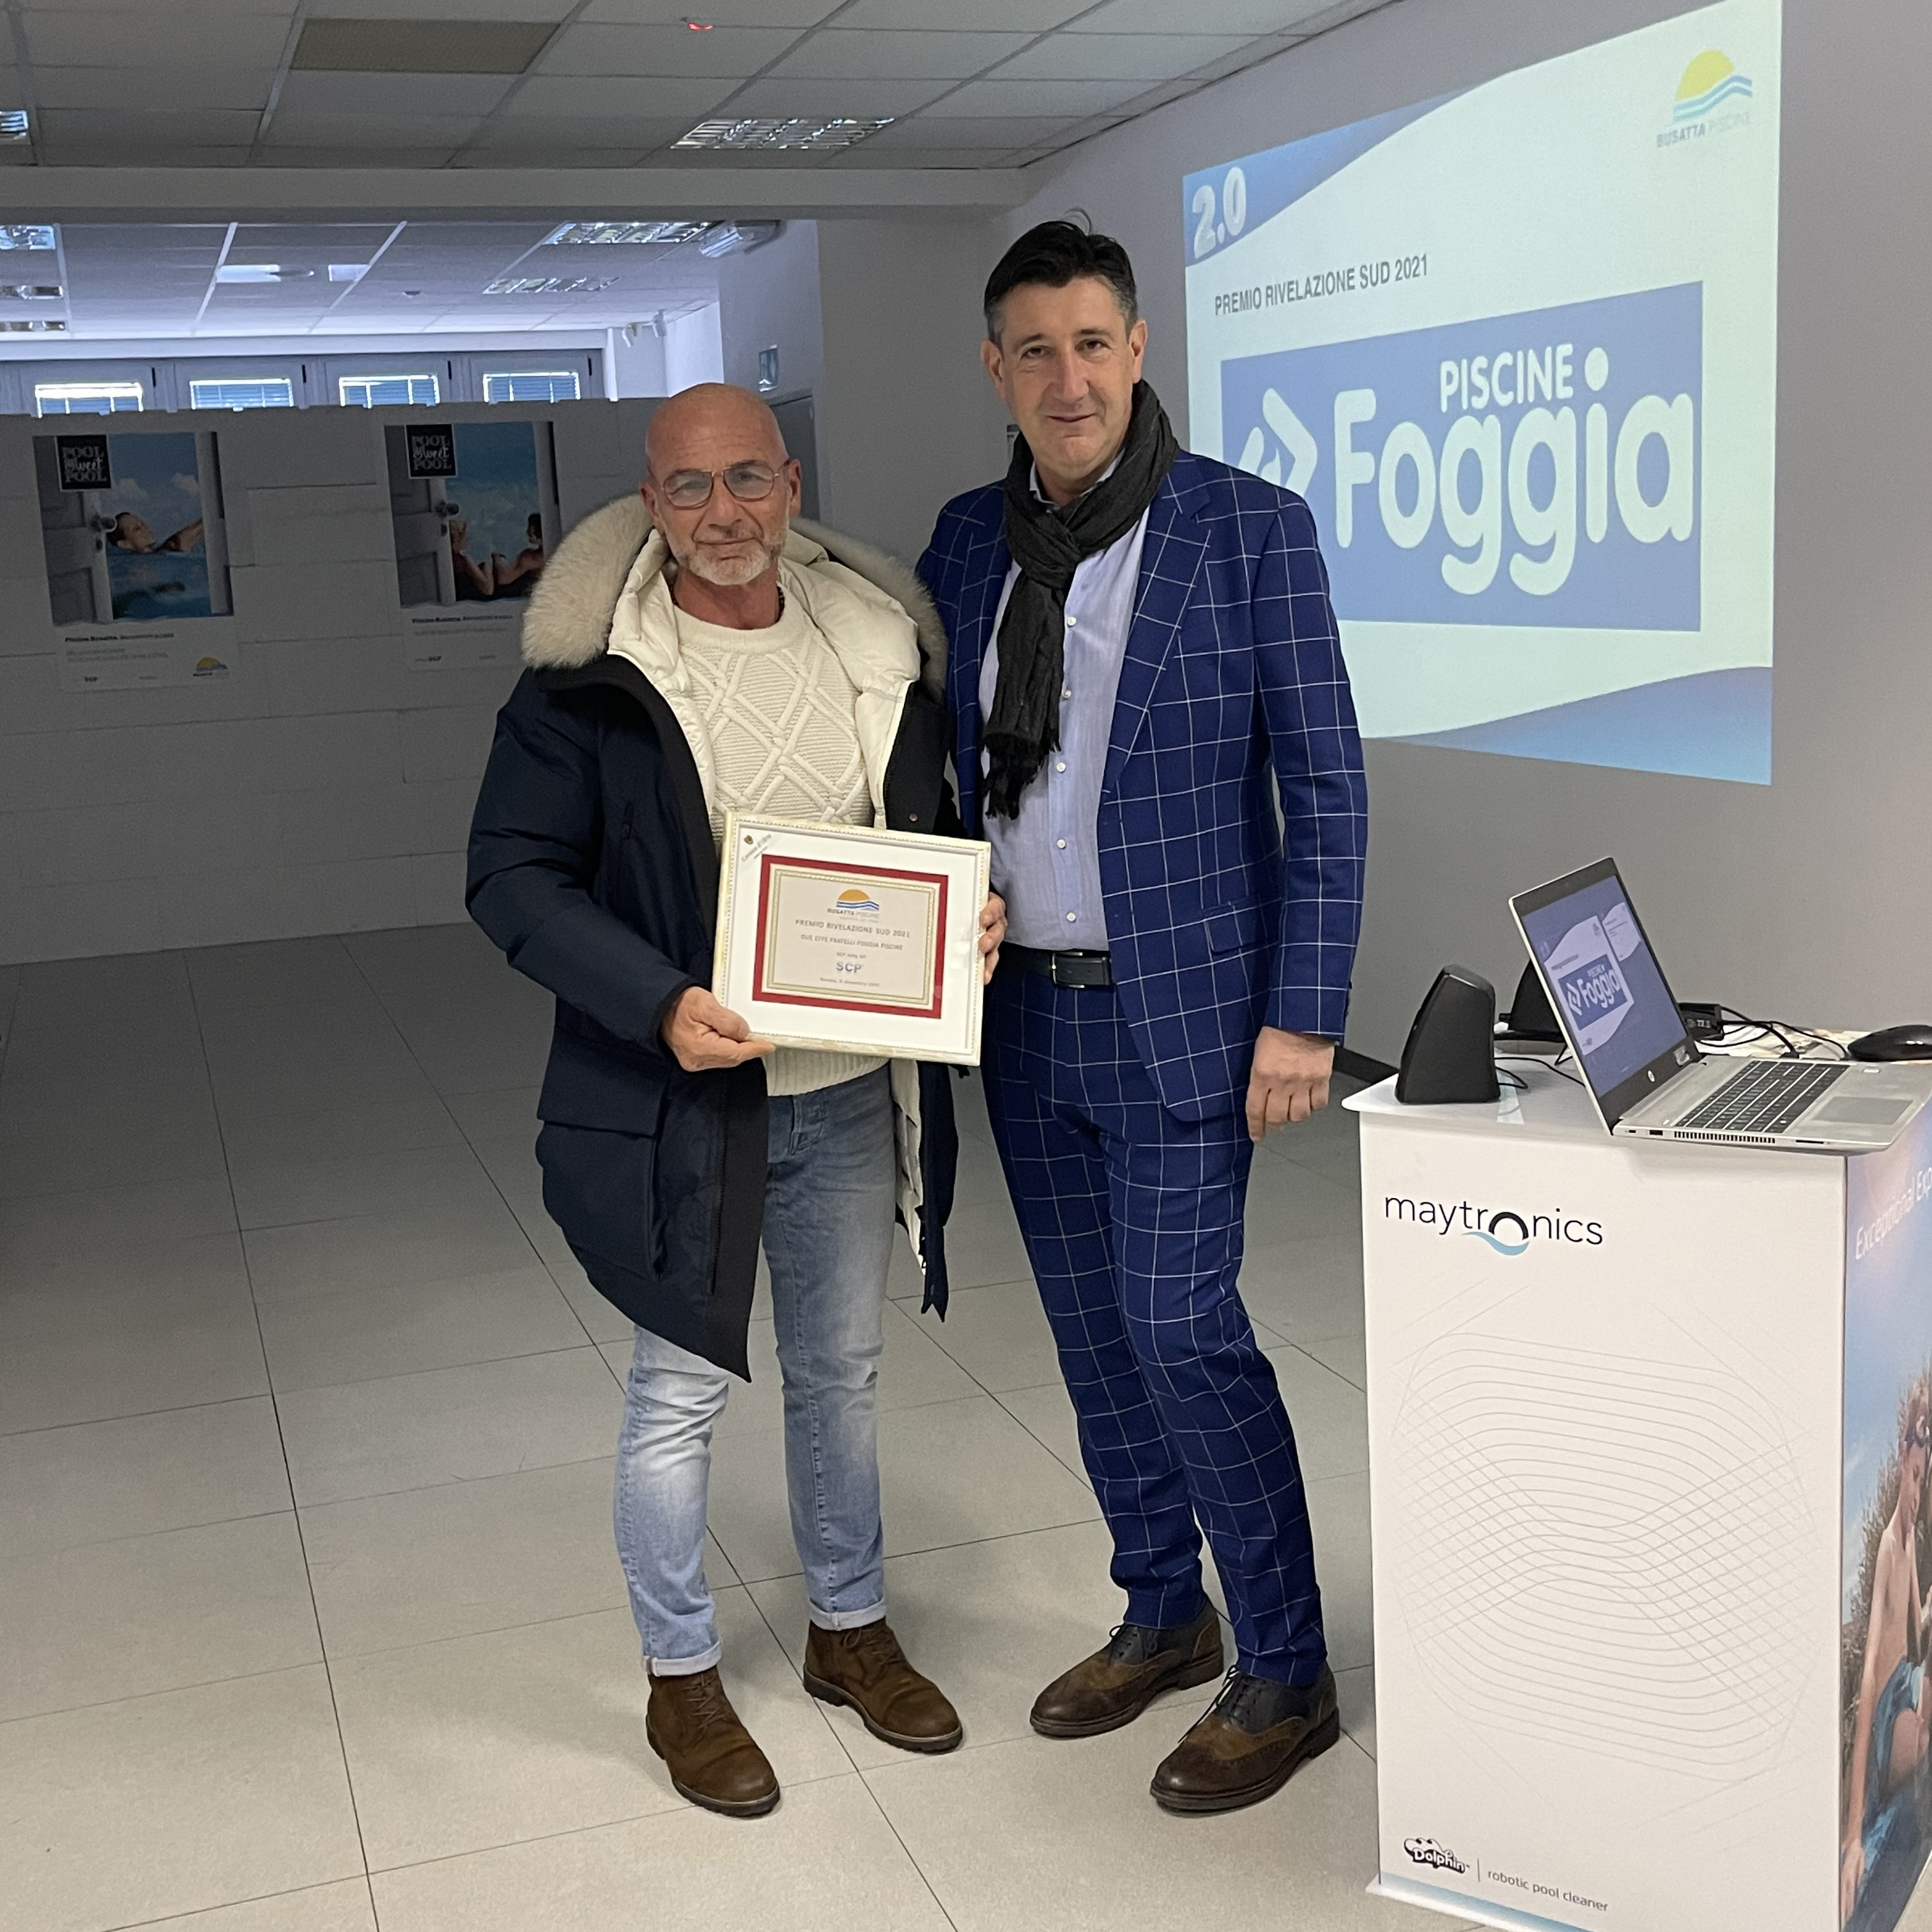 Two 2021 Revelation Award, South Award to Due Effe Fratelli Foggia in Rome